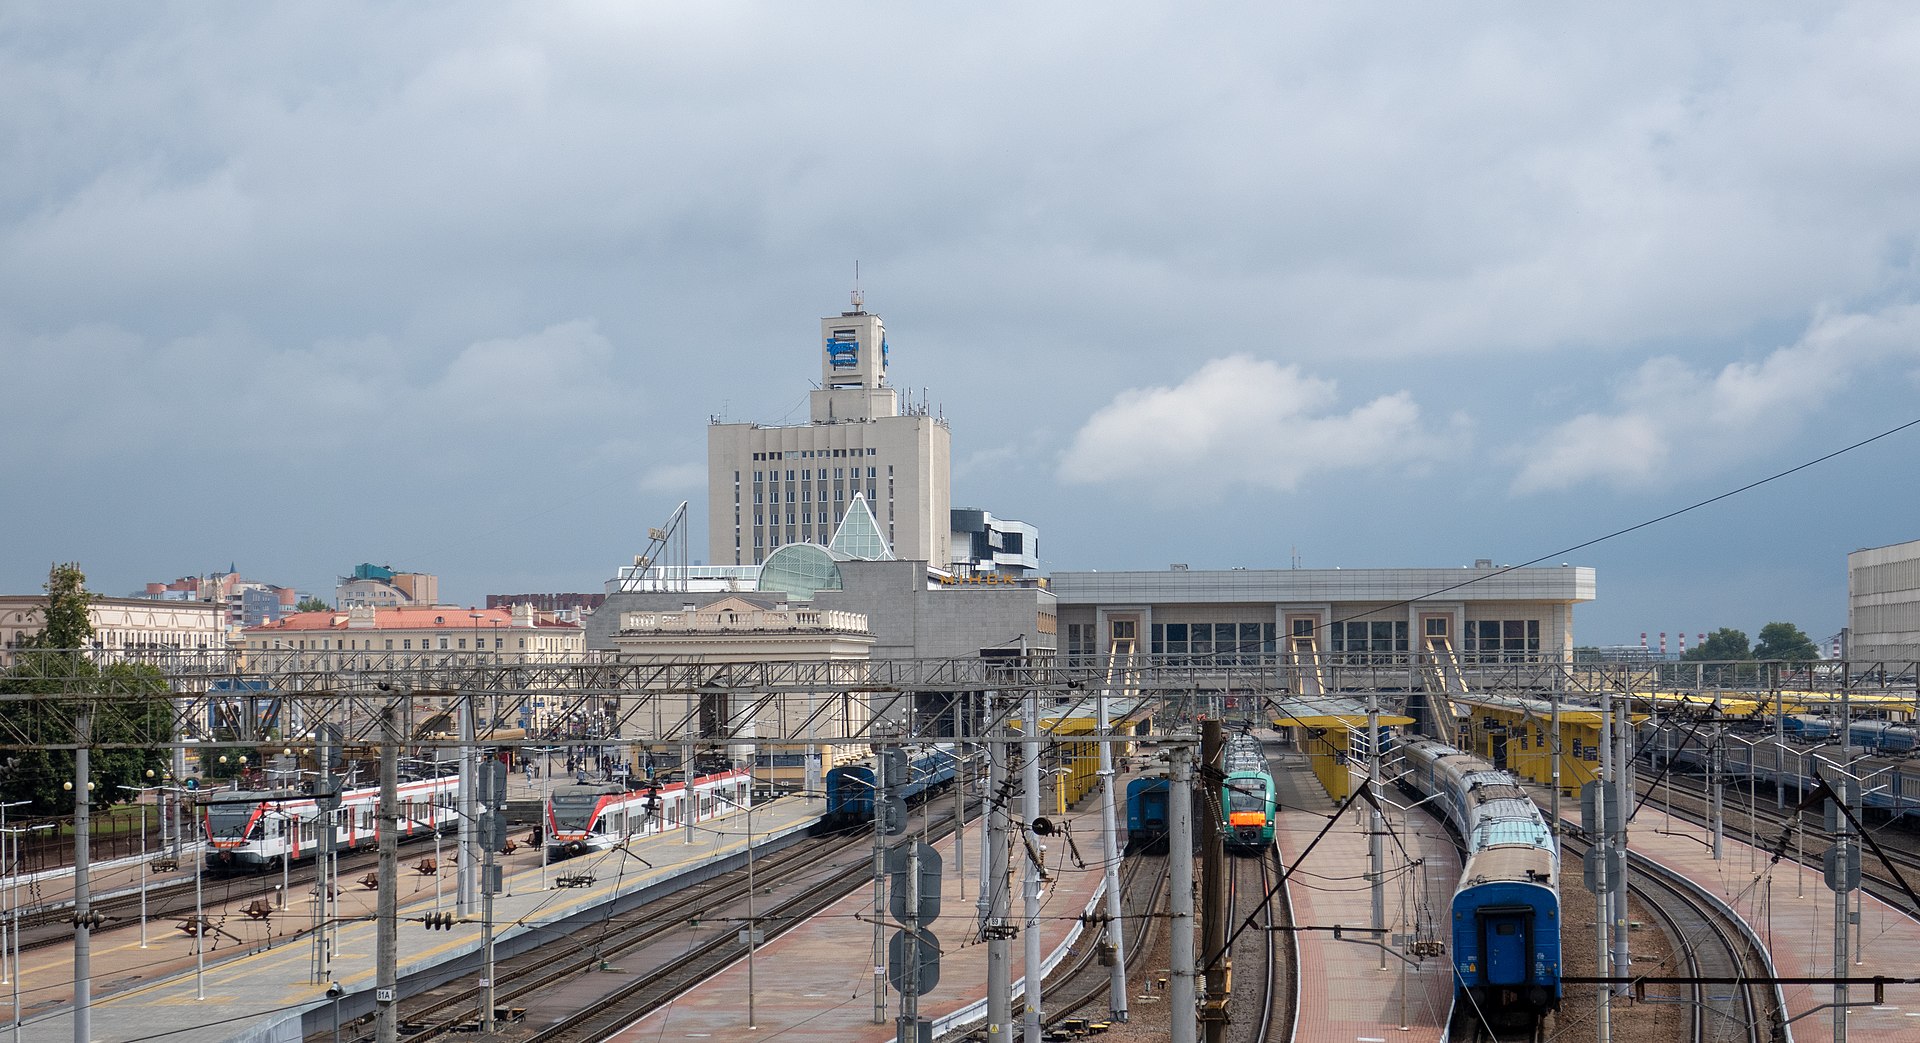 Hlavní nádraží v Minsku. By Homoatrox - Own work, CC BY-SA 3.0, https://commons.wikimedia.org/w/index.php?curid=80529019